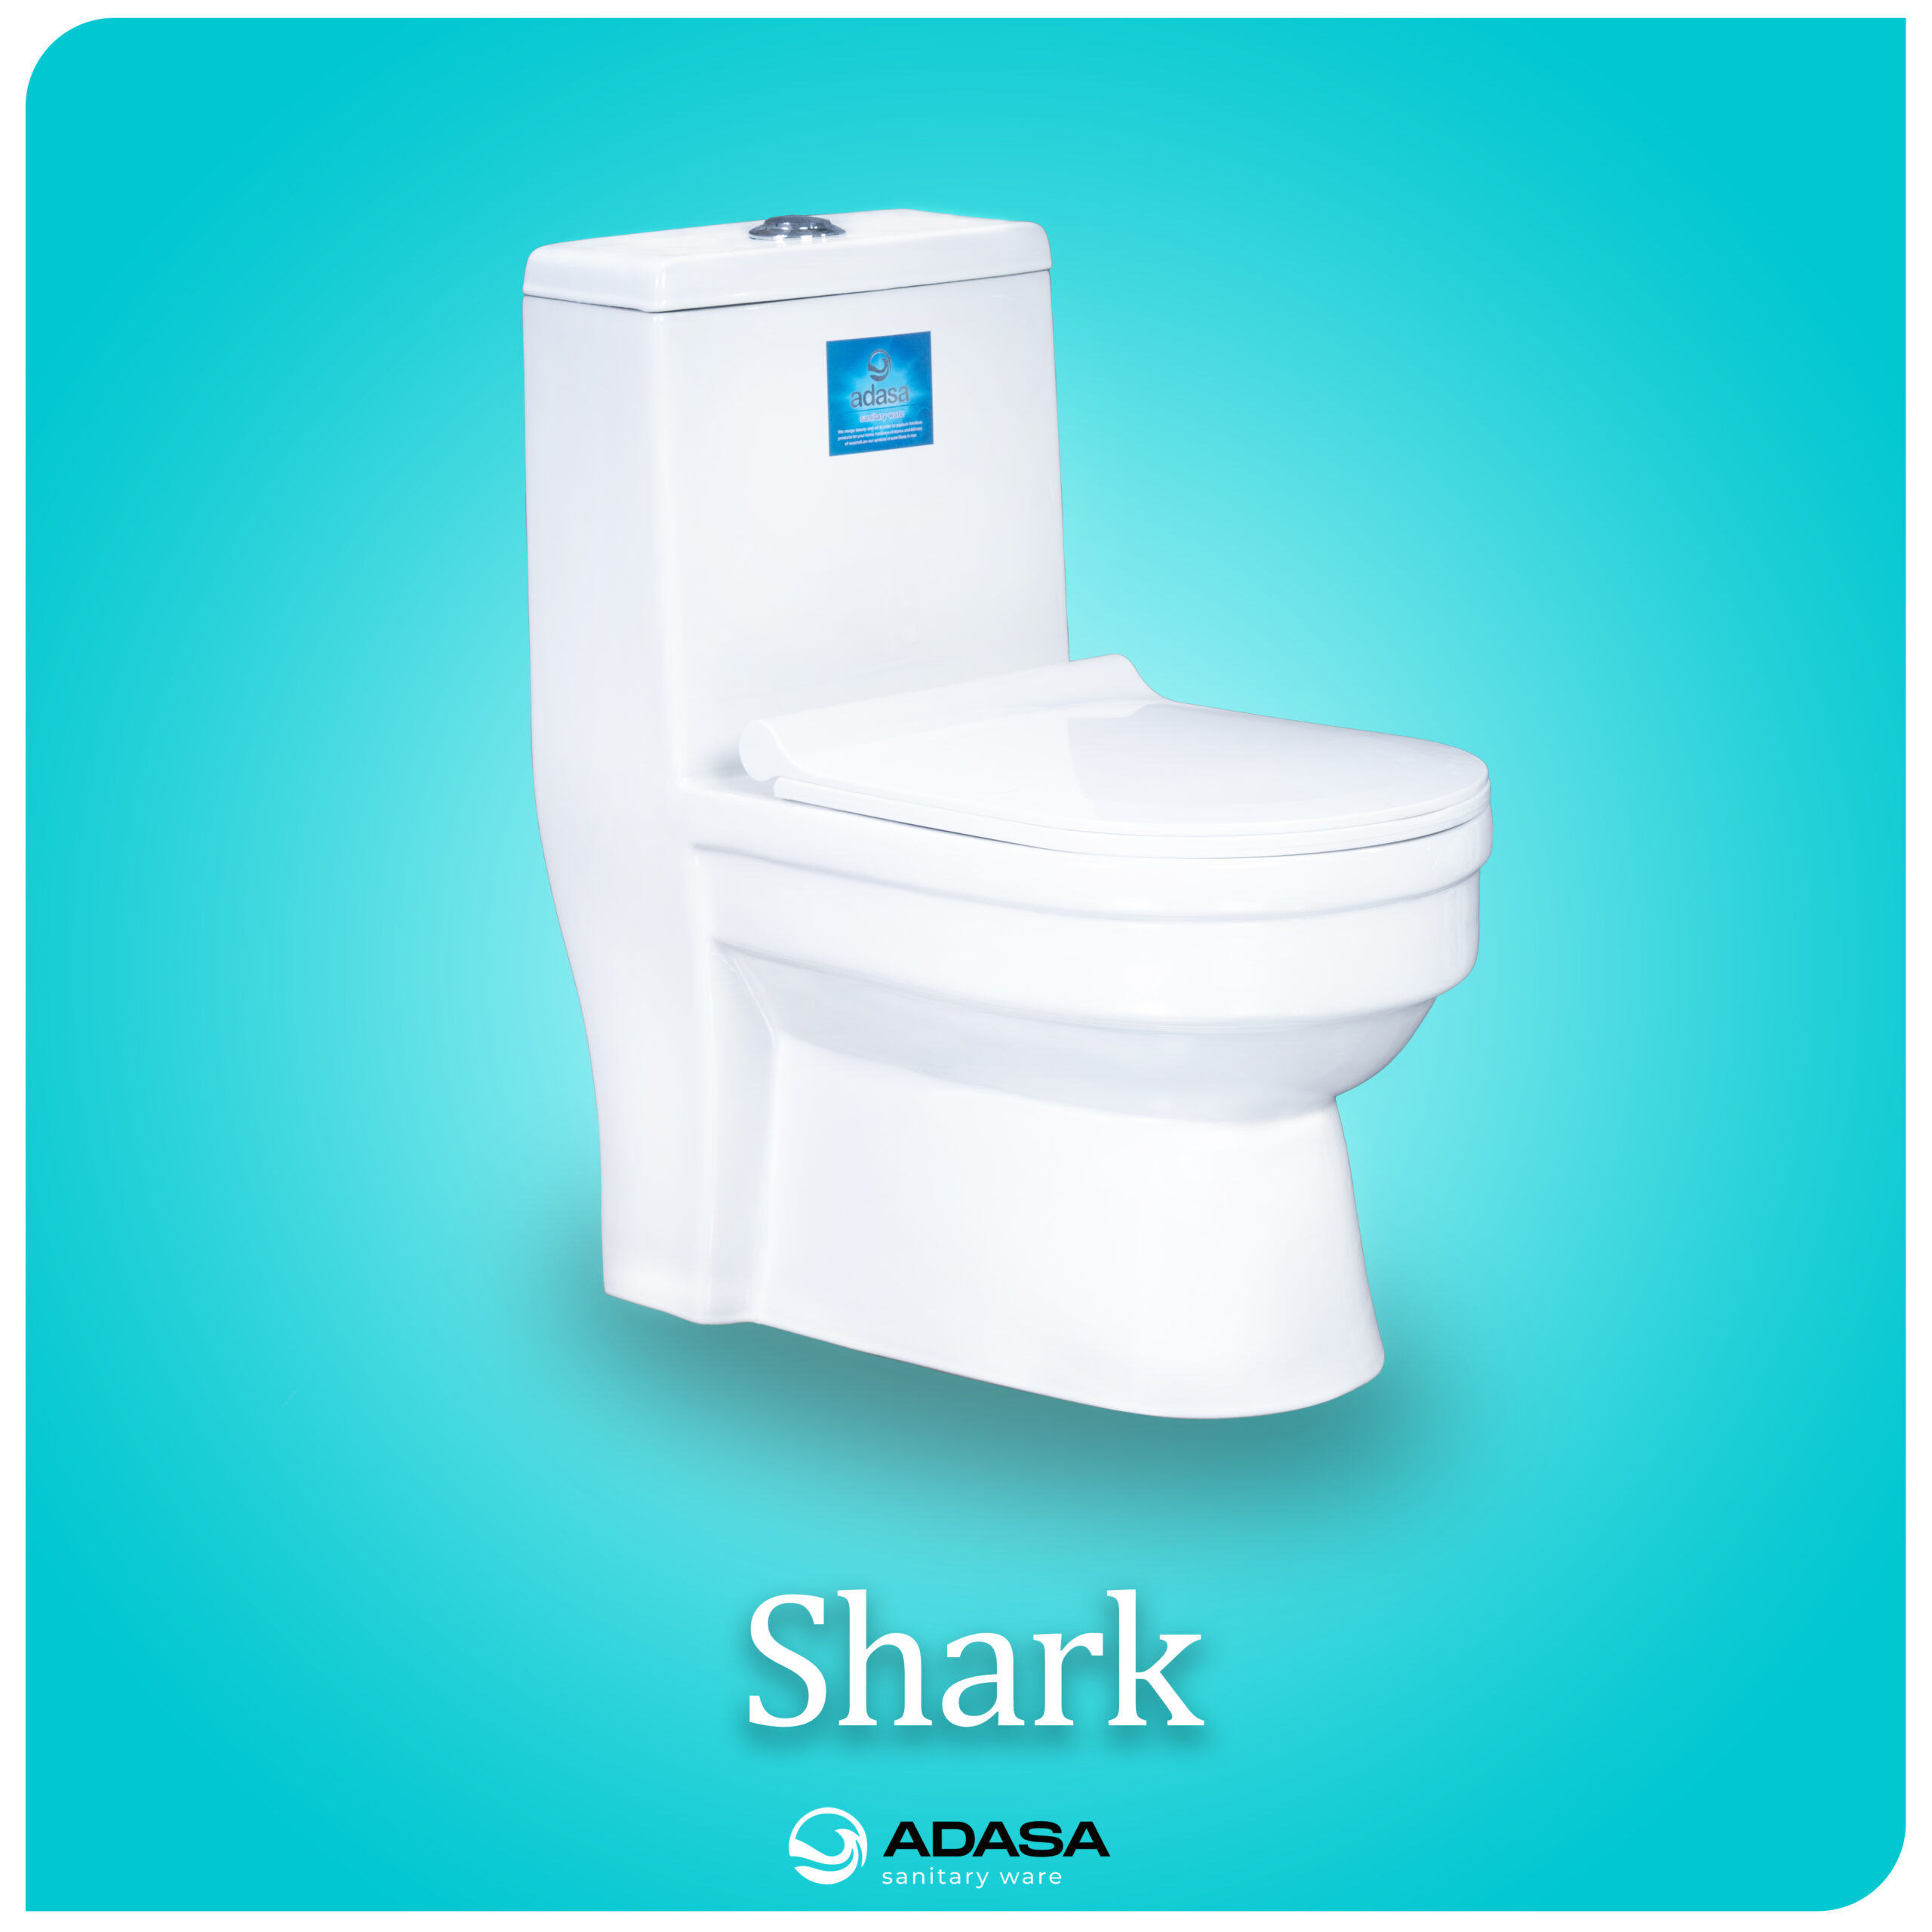 توالت فرنگی مدل shark برند Adasa